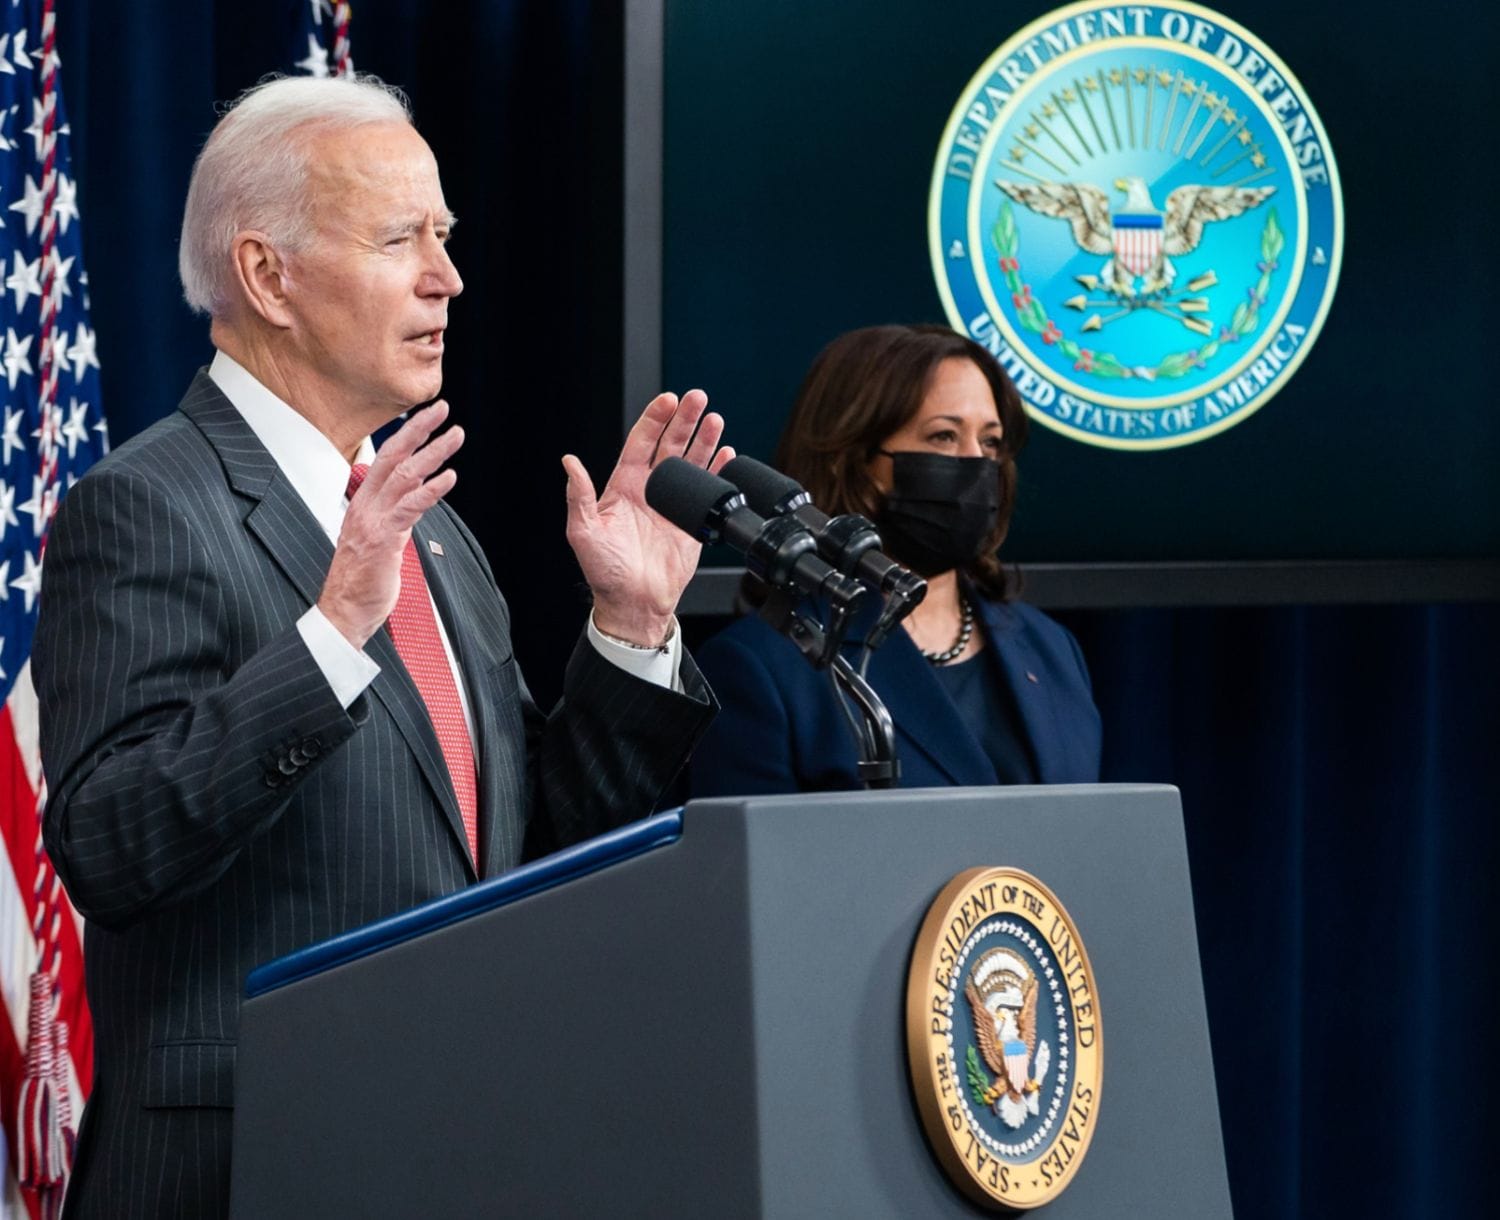 Biden unveils his expansive immigration agenda